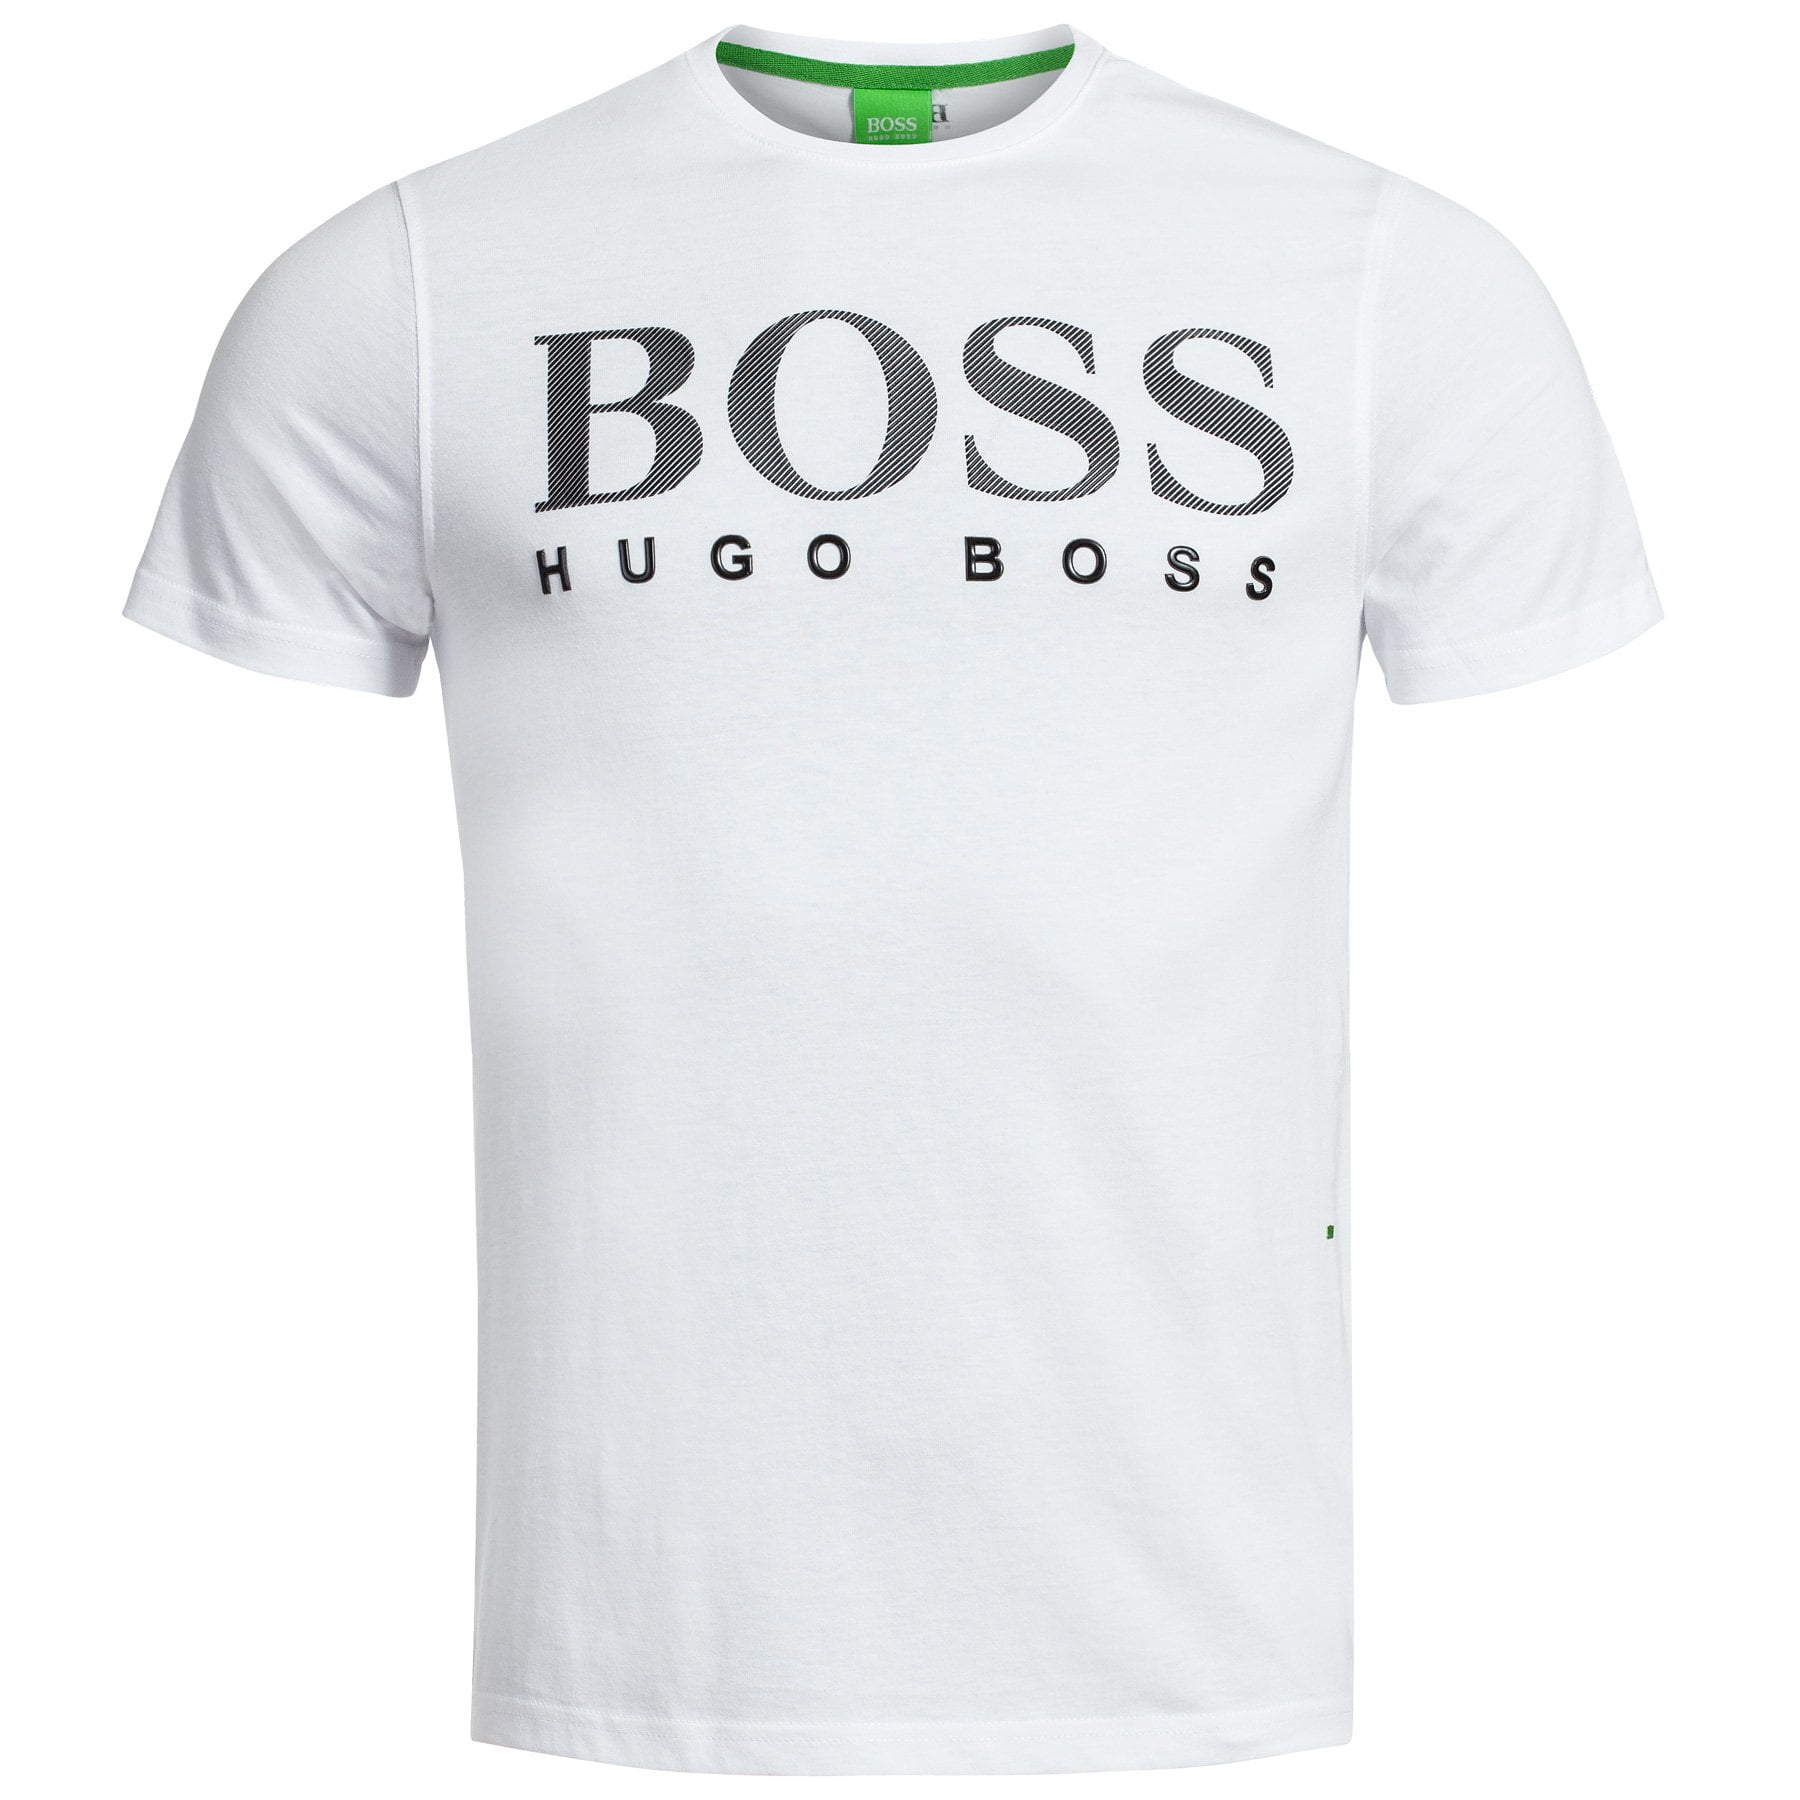 hugo boss t shirts price Cheaper Than 